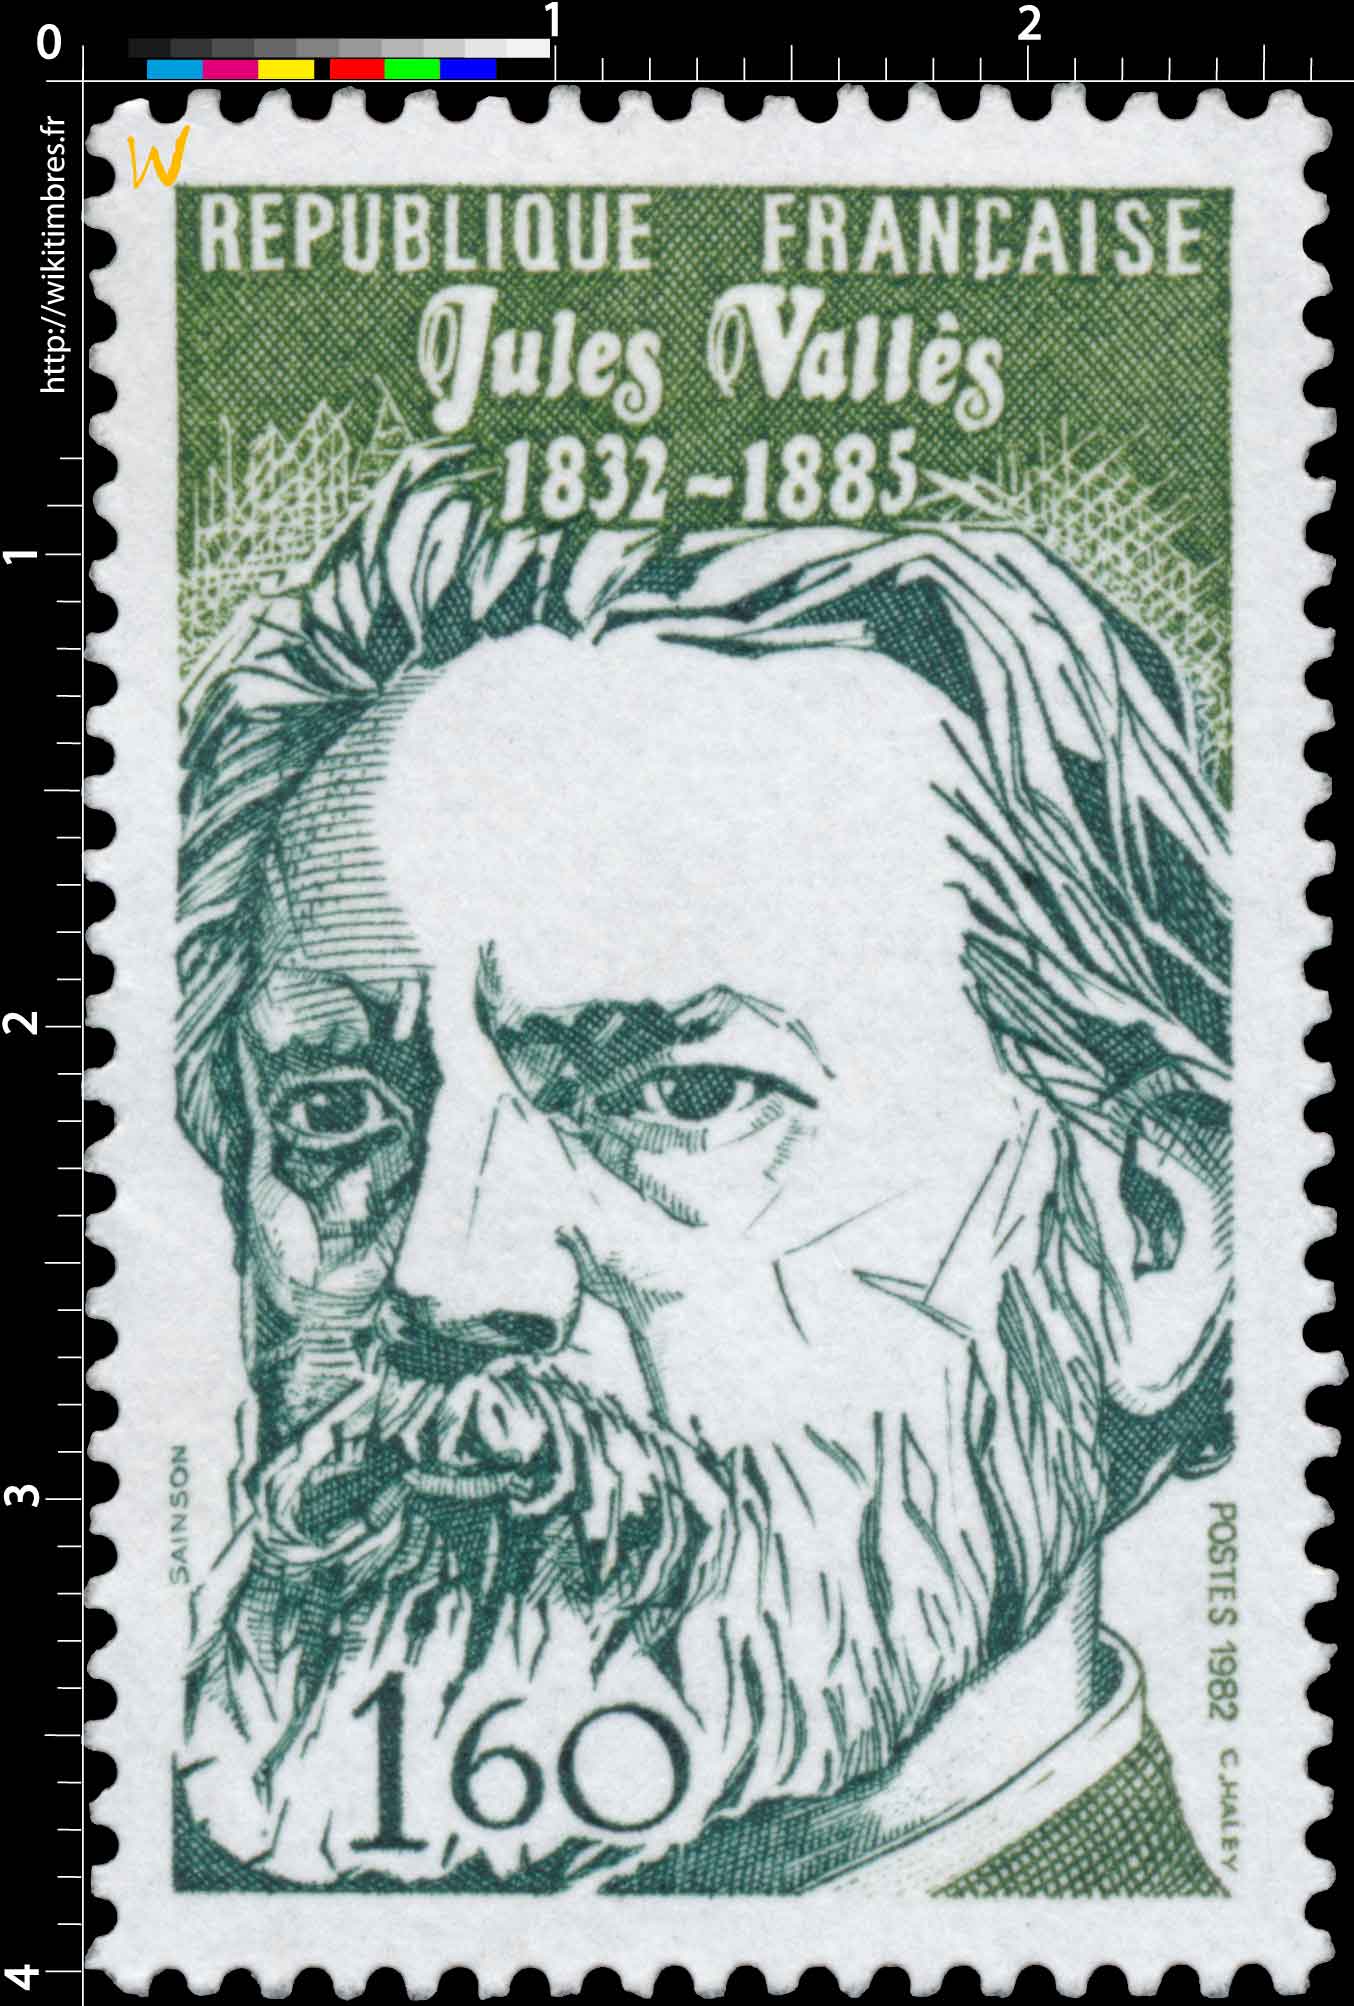 1982 Jules Vallès 1832-1885